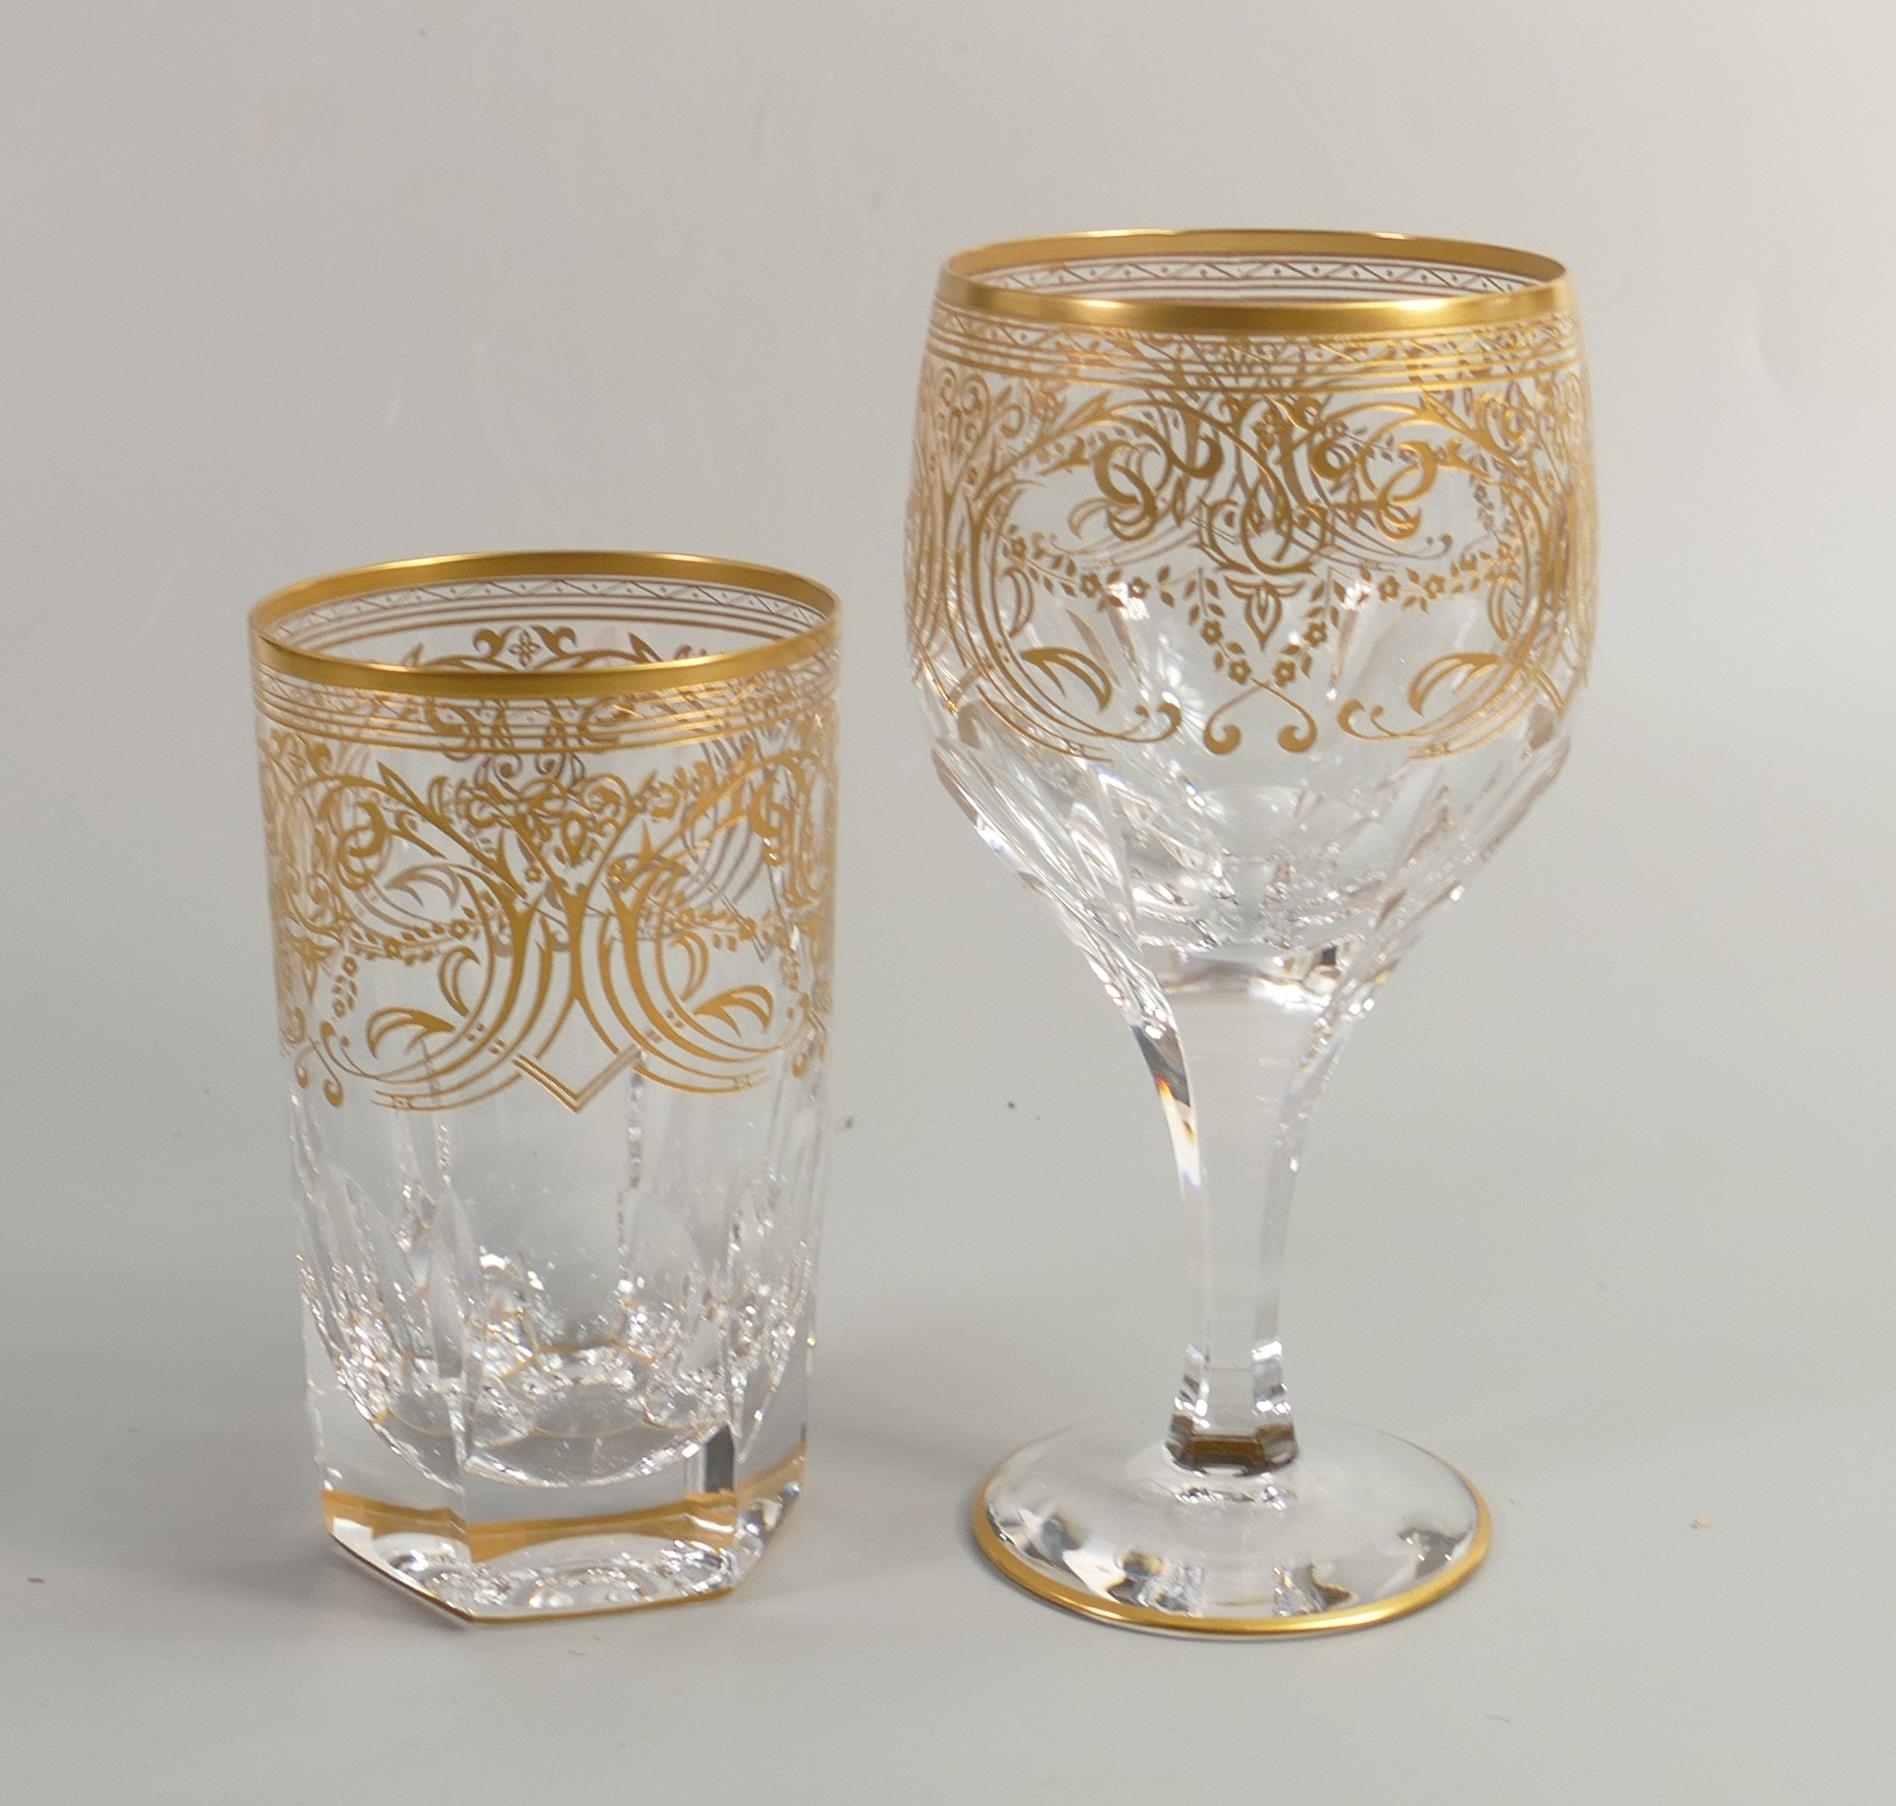 De Lamerie Fine Bone China Glass Crystal Patterned heavily gilded White Wine Glass & Tumbler, Made